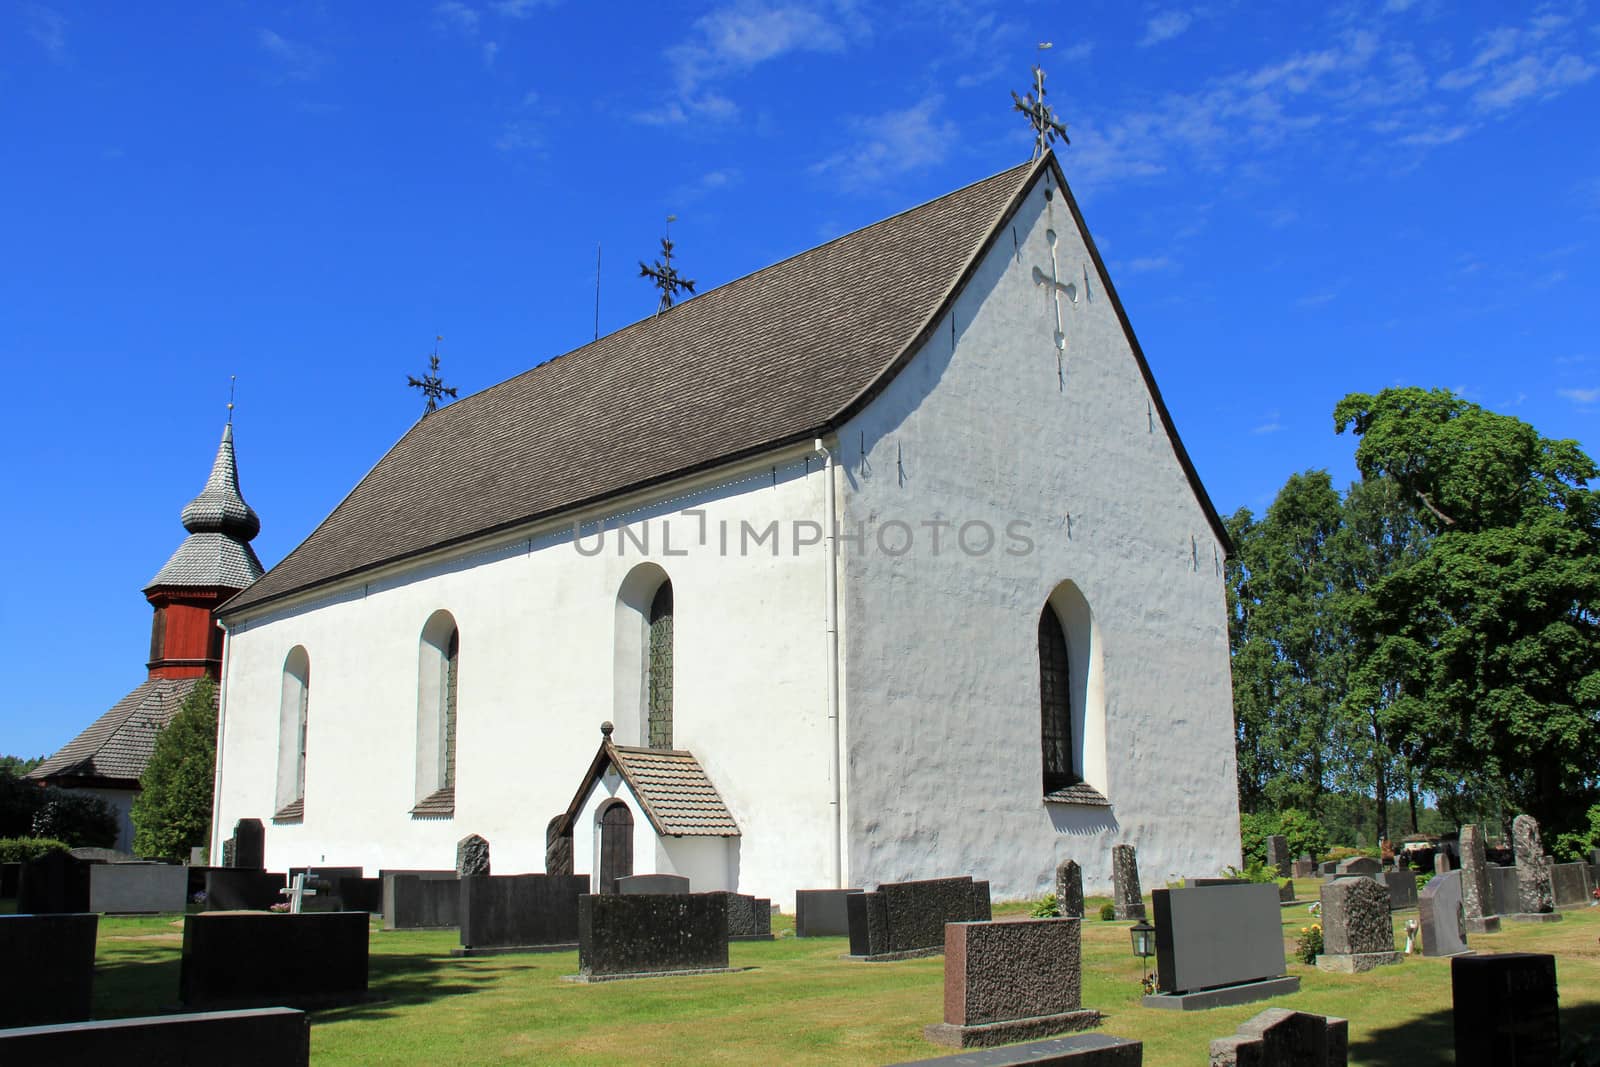 Askainen Church, Finland by Tainas